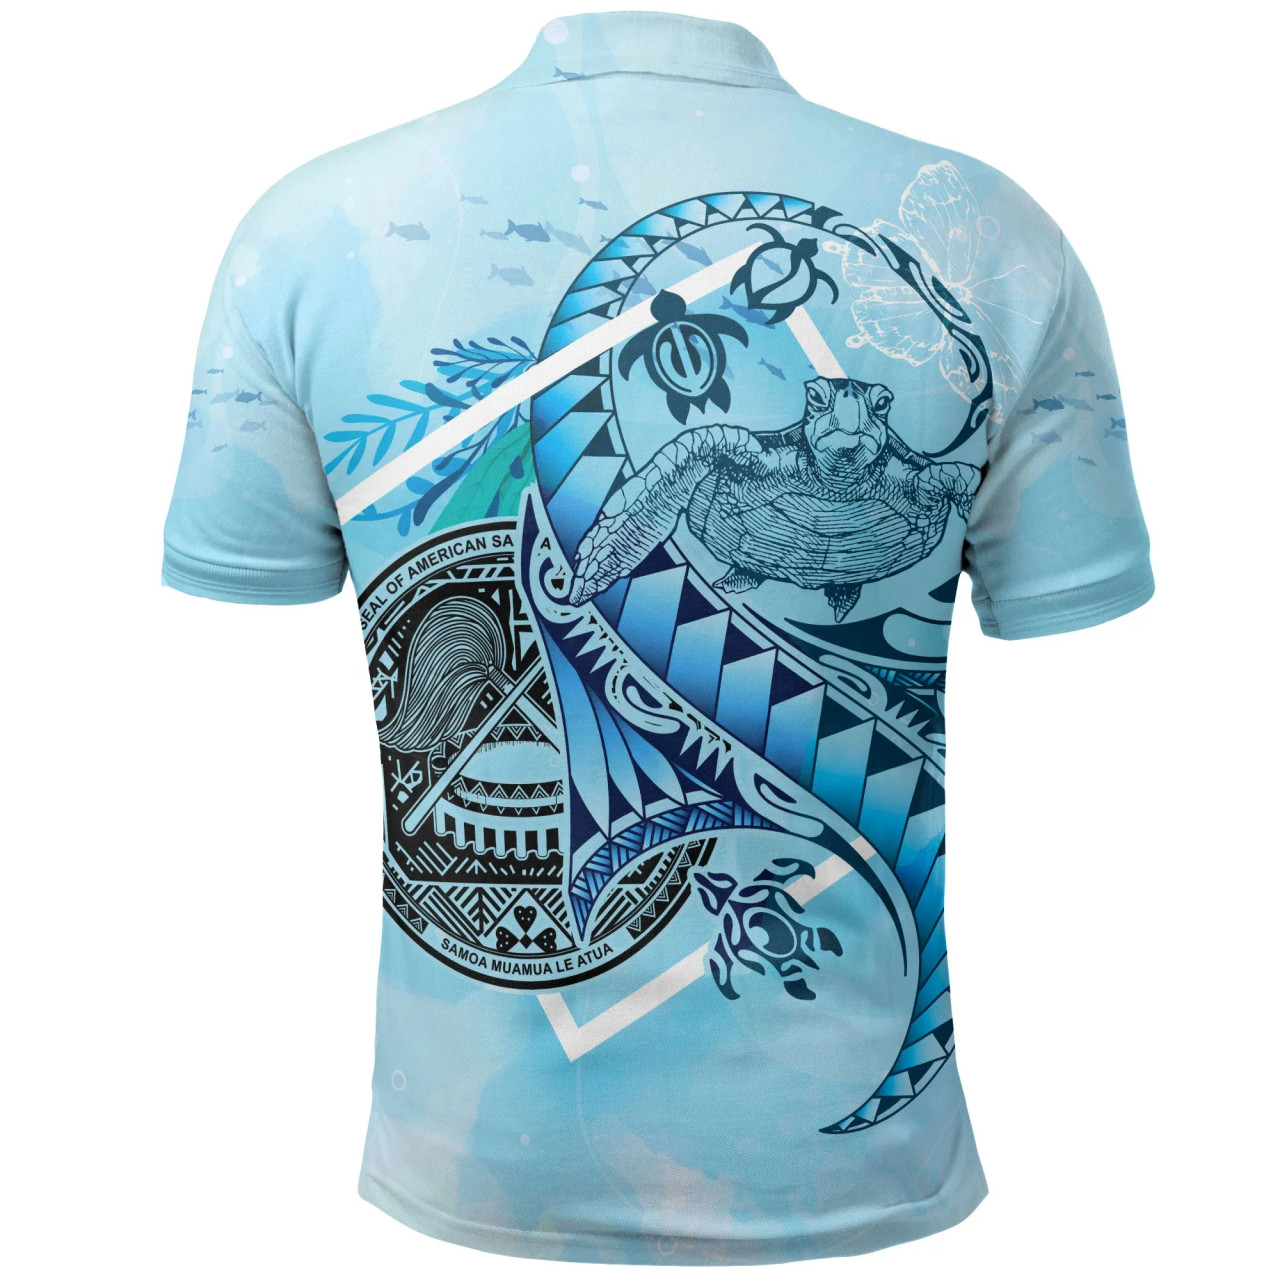 American Samoa Shirt Polo - Polynesian Turtle Under The Sea 2